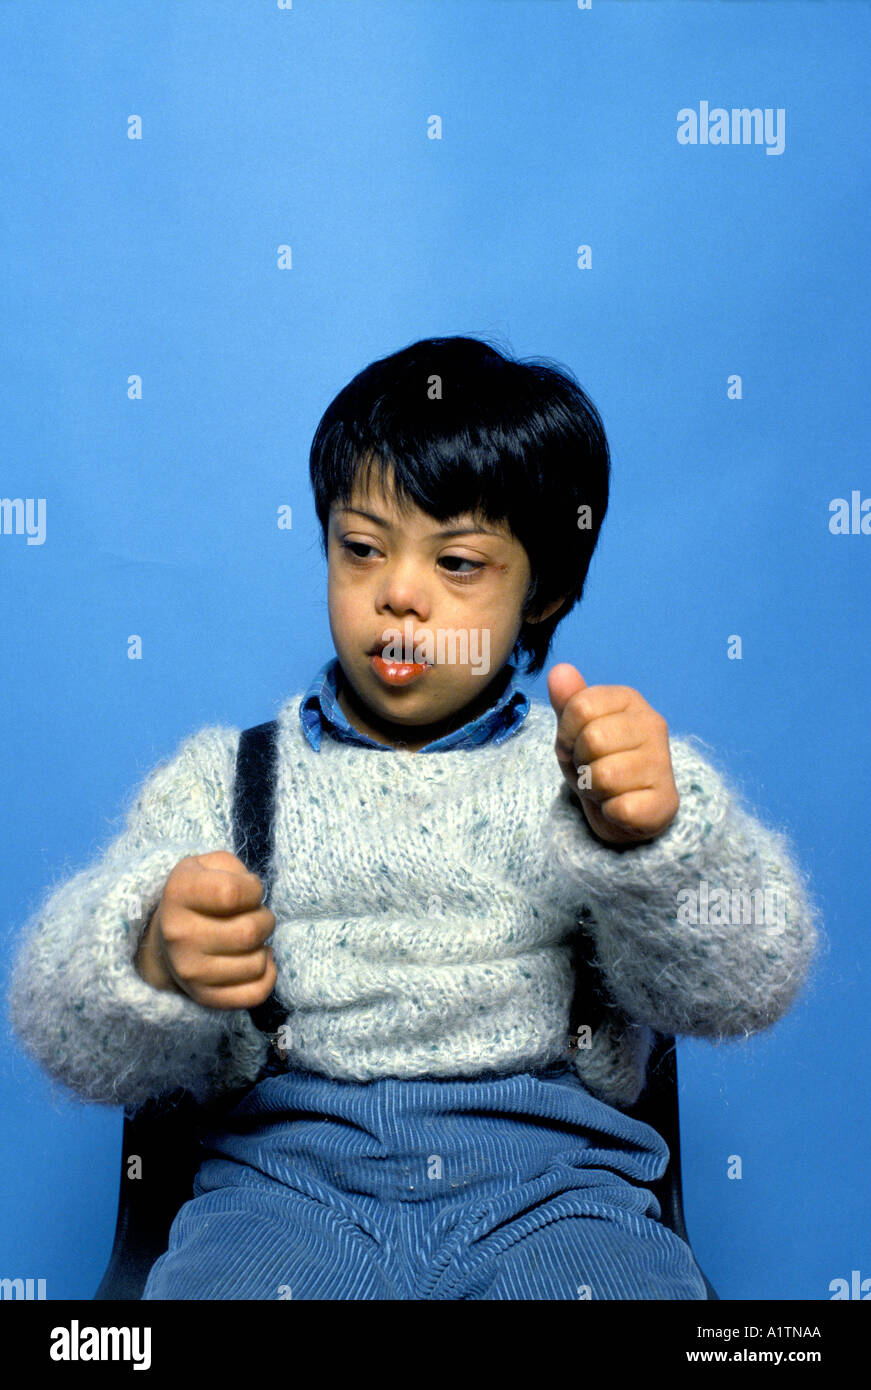 DEAF CHILD USING SIGN LANGUAGE Stock Photo